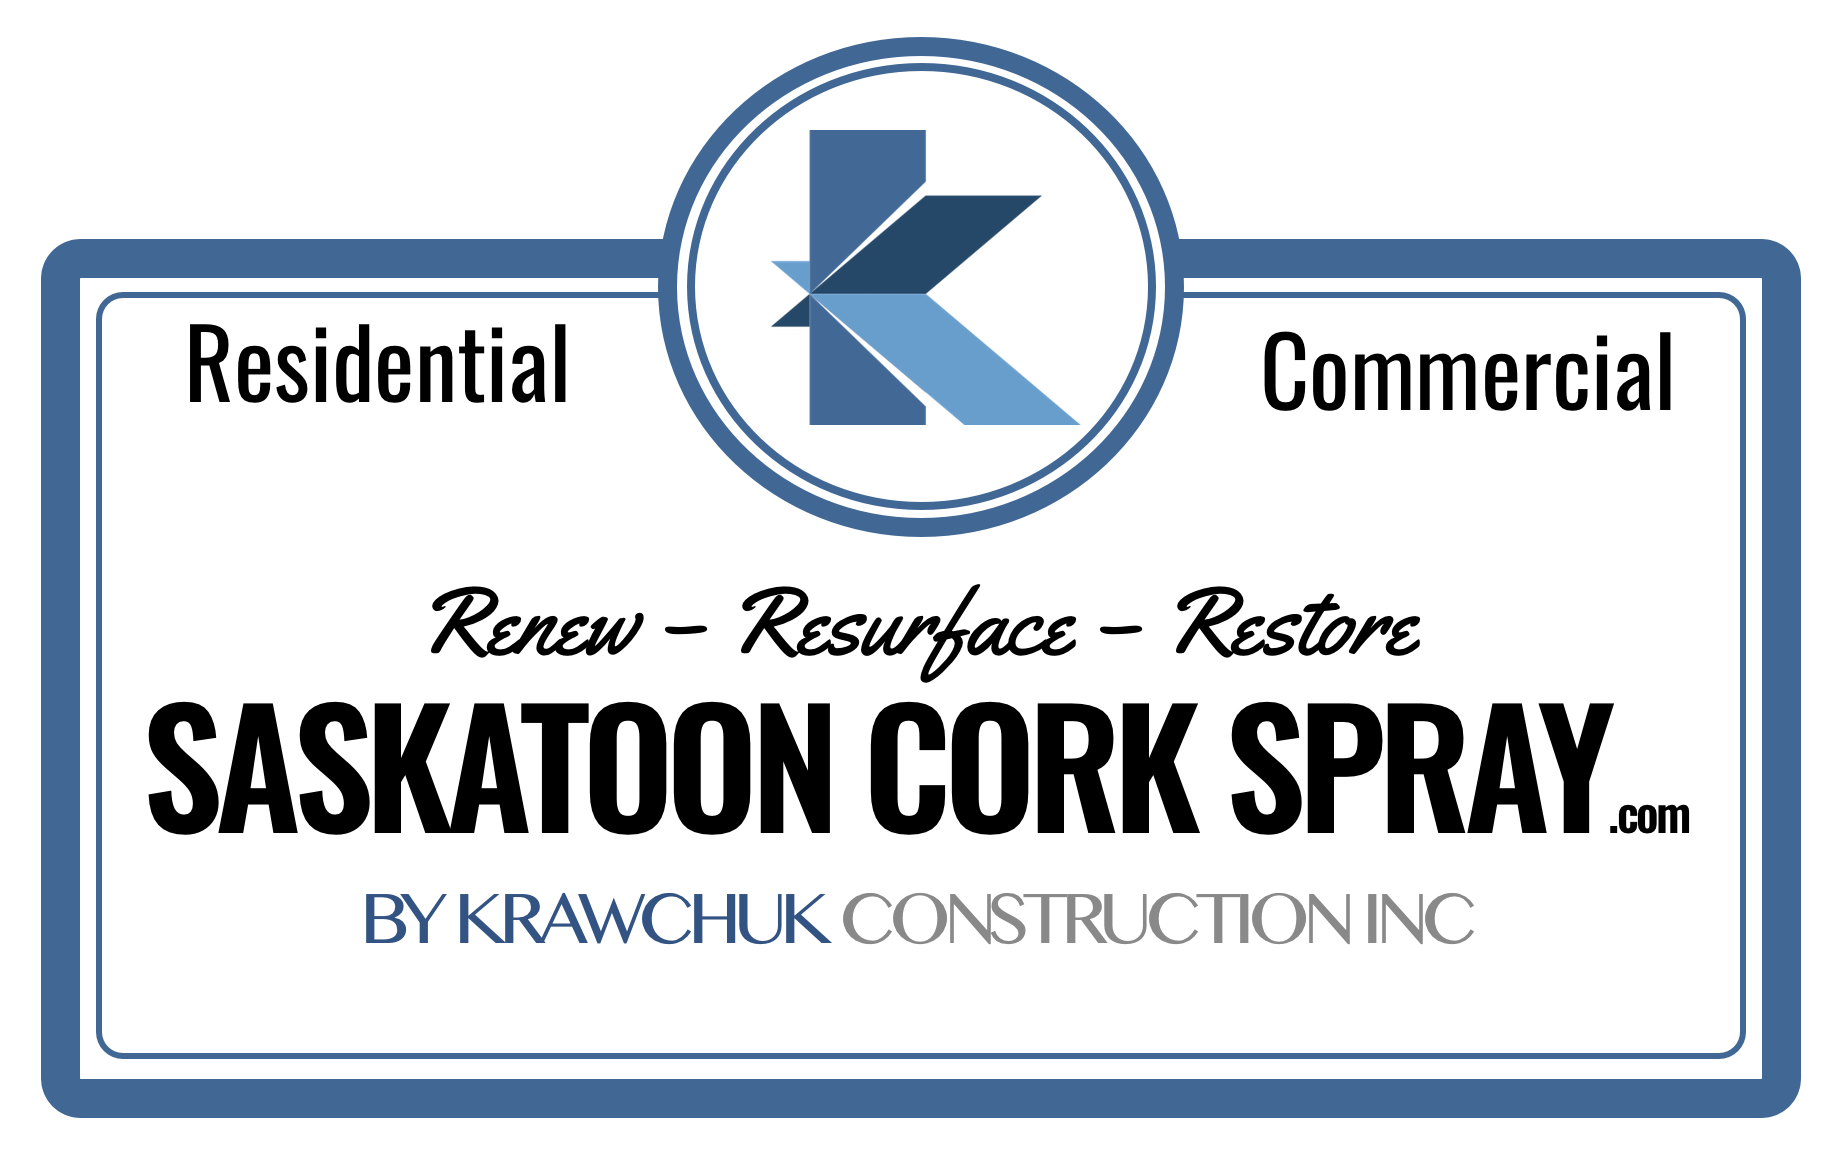 Certified saskatoon thermal cork spray installers